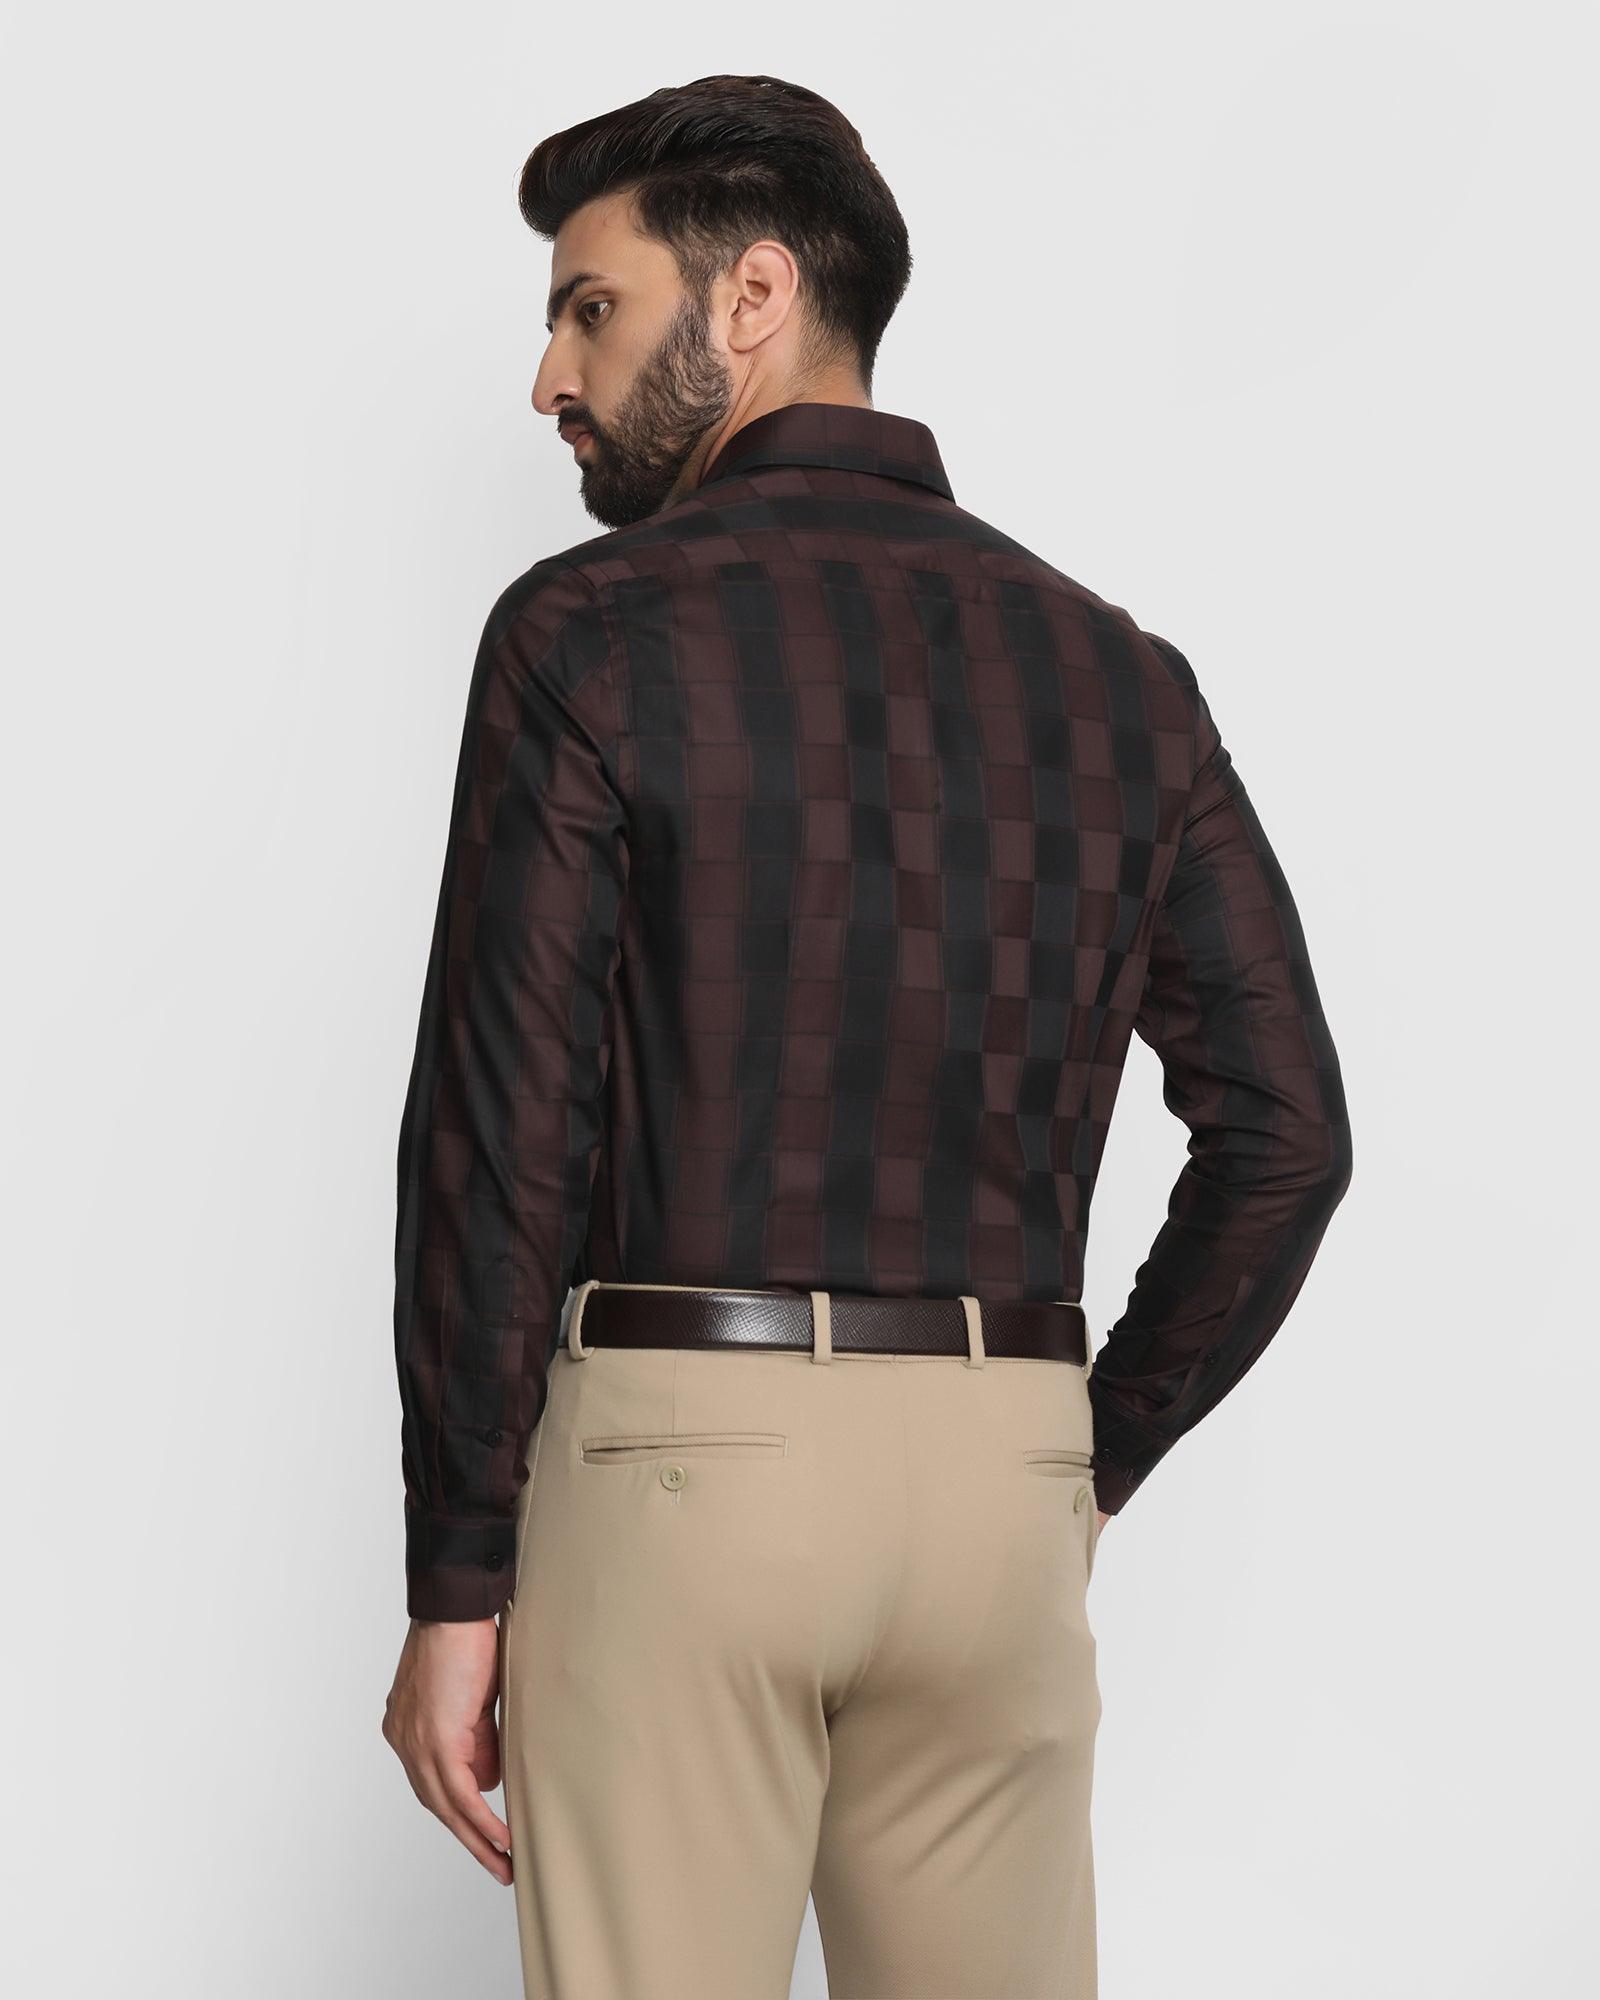 Regal Check Shirt In Dark Brown – The Formal Club